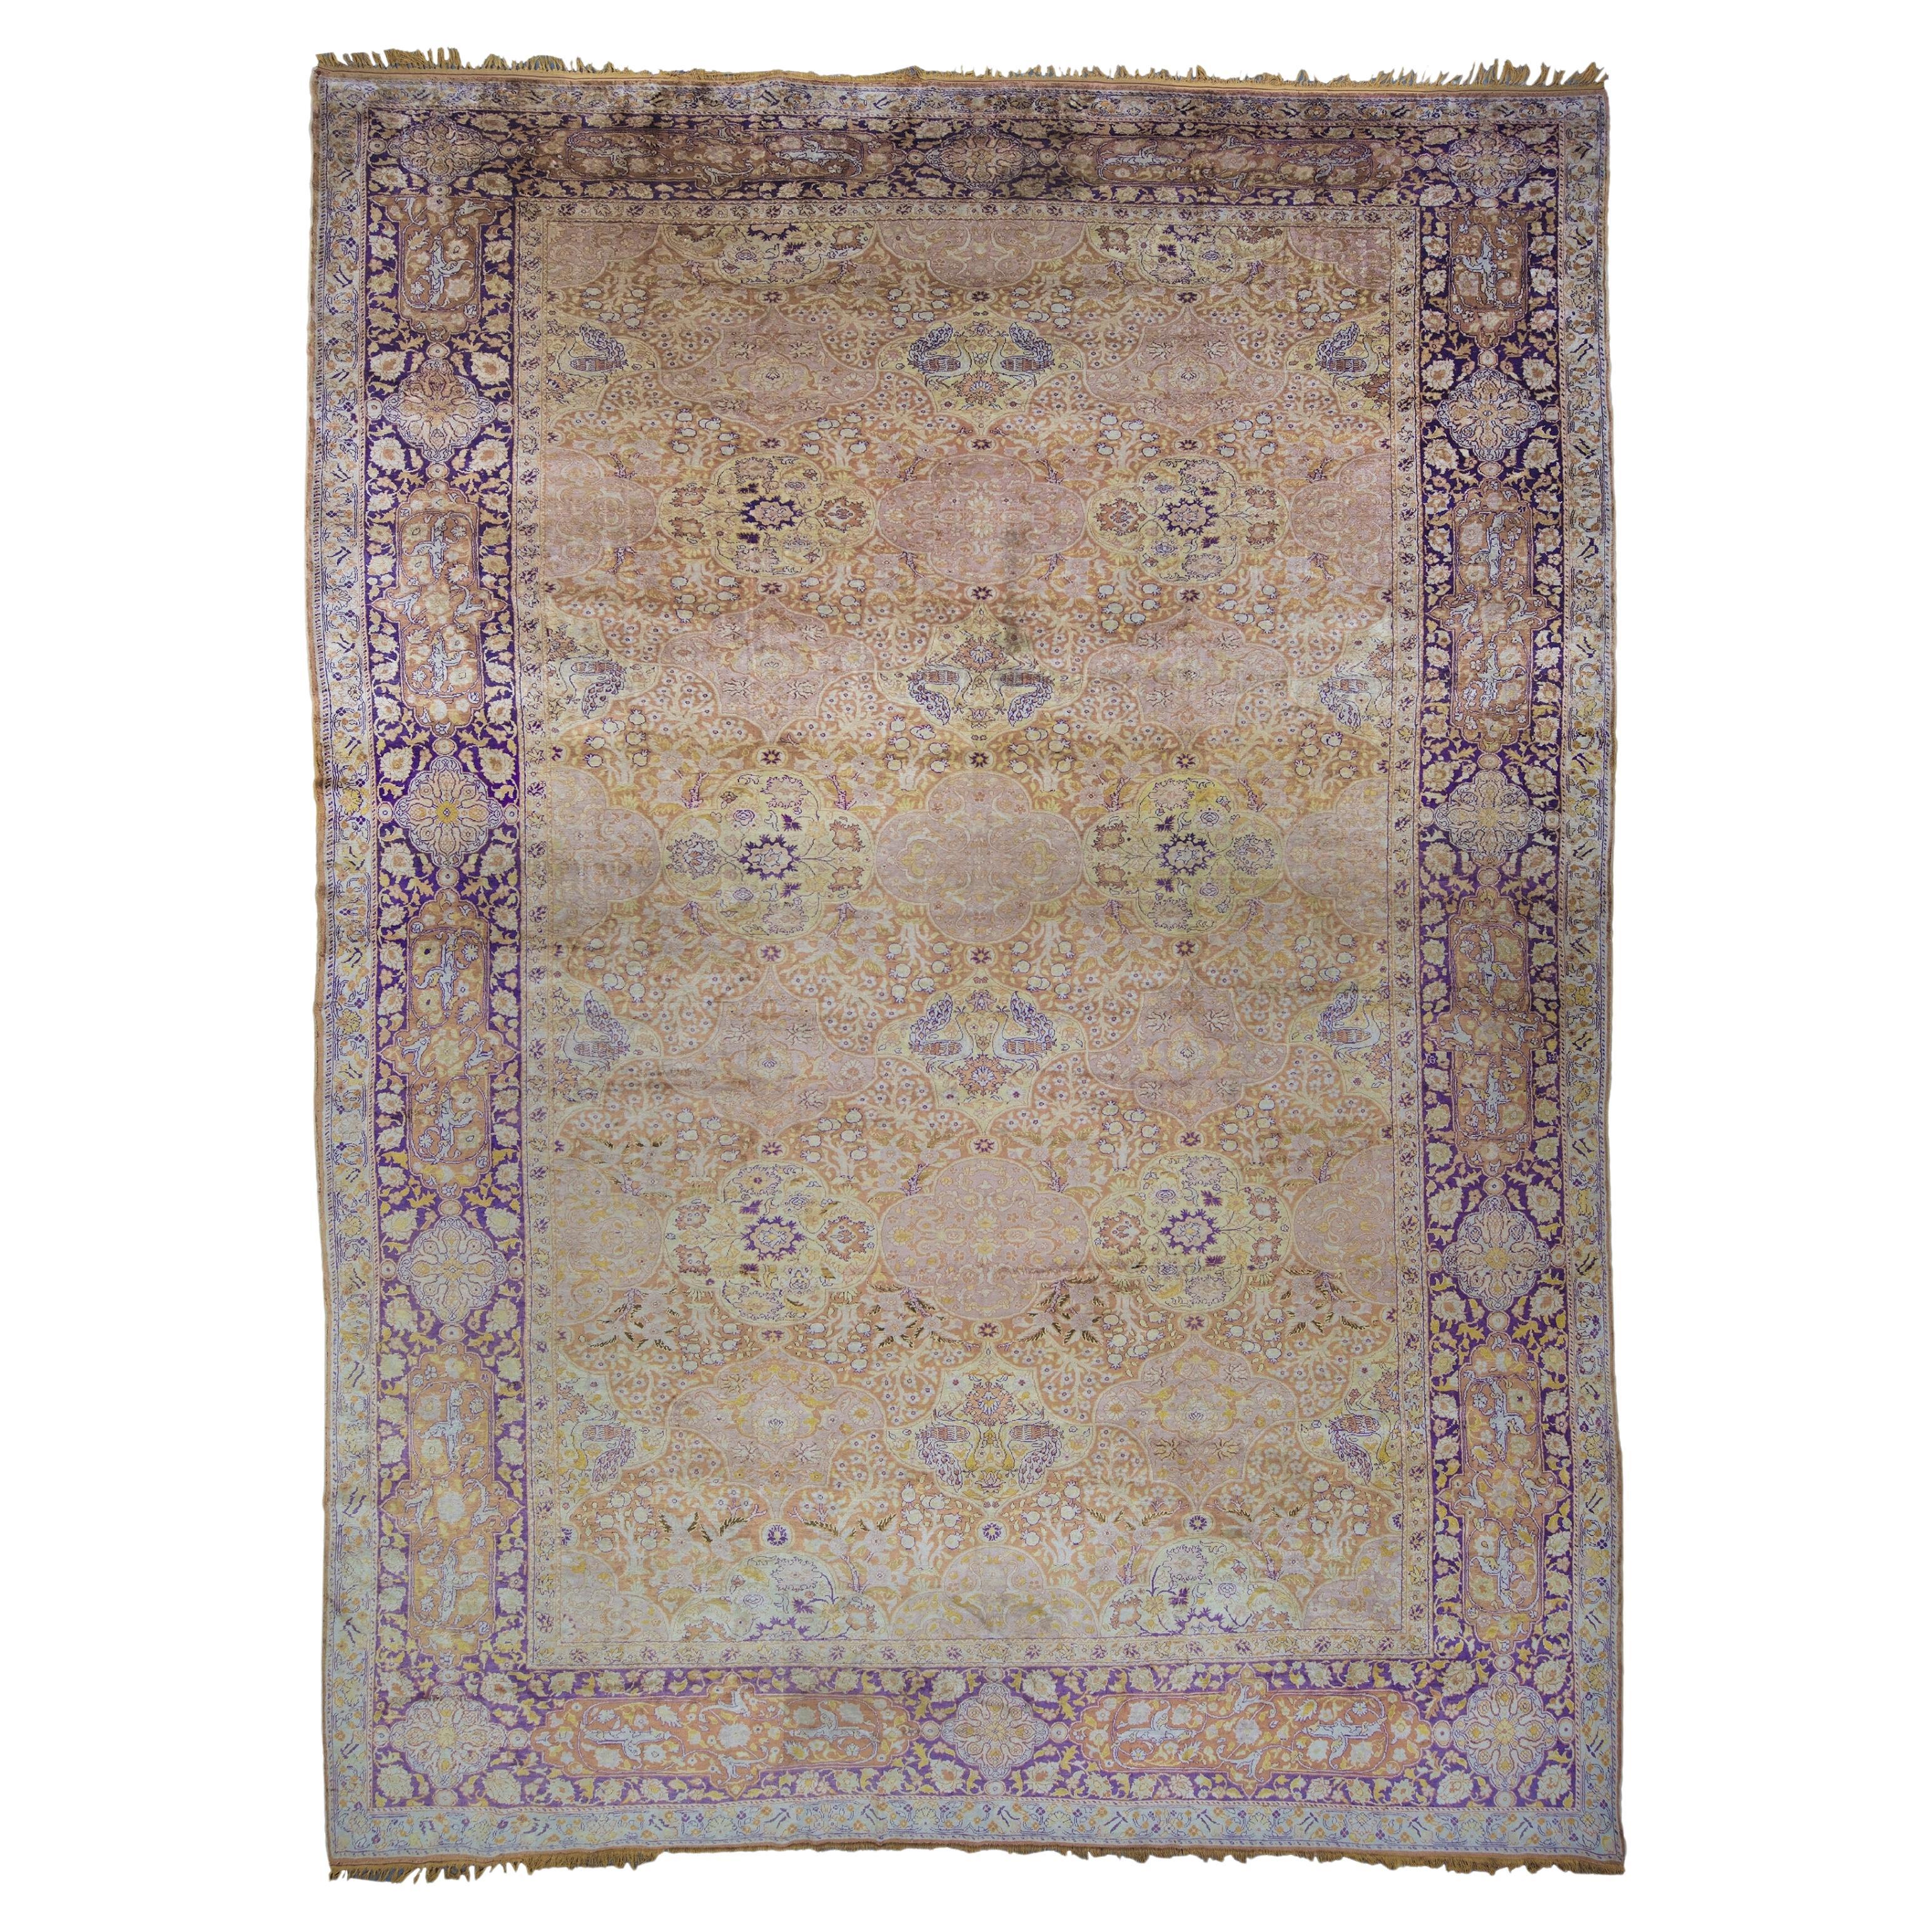 Antique Kayseri Silk Rug - 20th Century Kayseri Silk Carpet, Antique Carpet